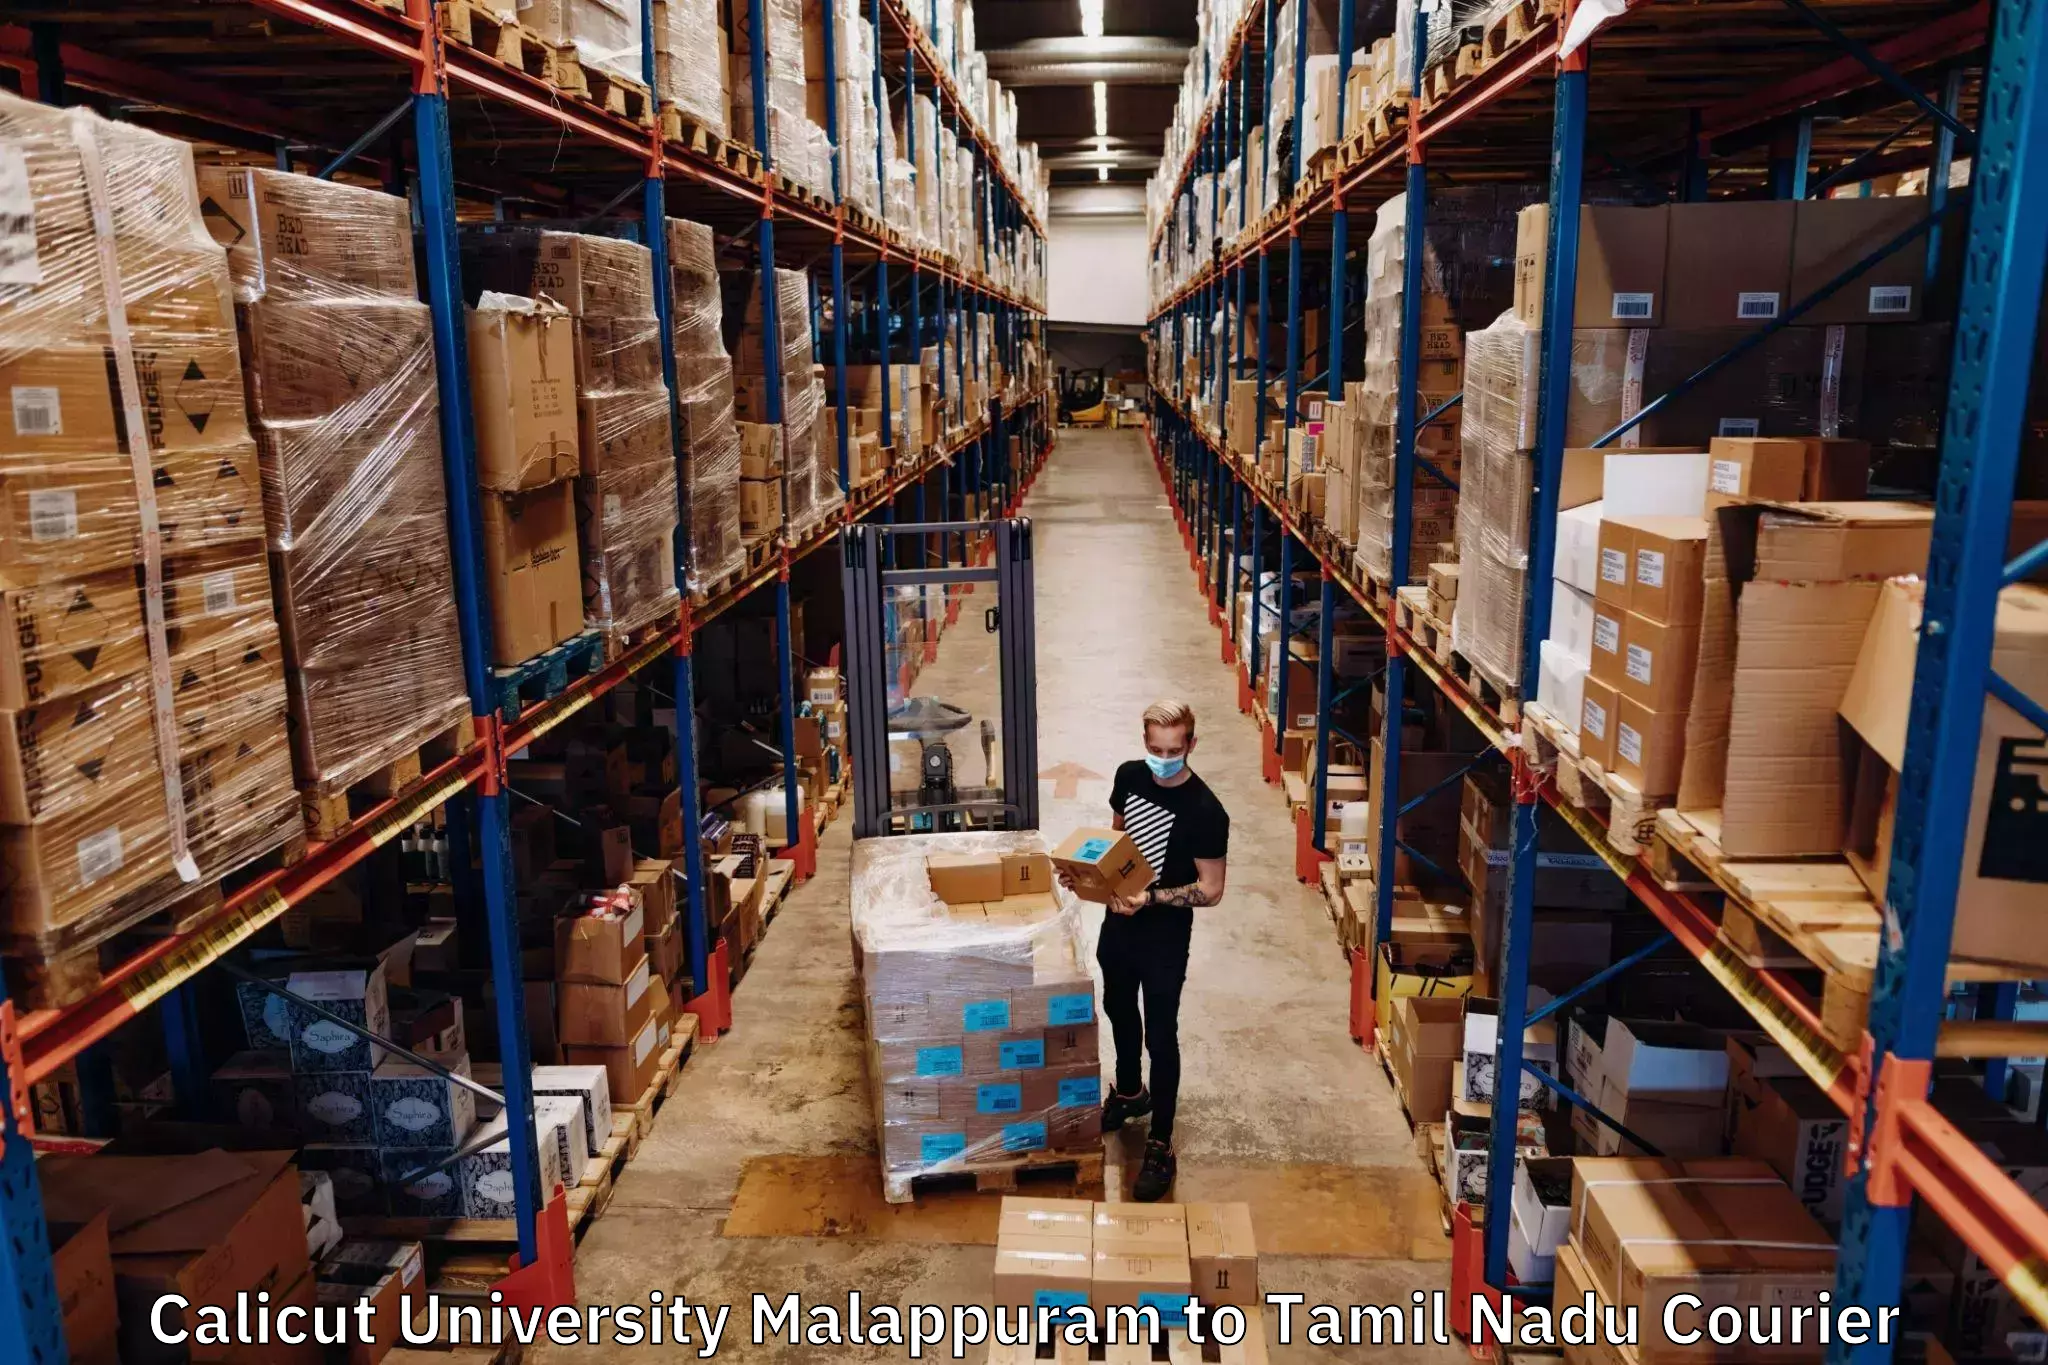 Cross-border shipping Calicut University Malappuram to Nagapattinam